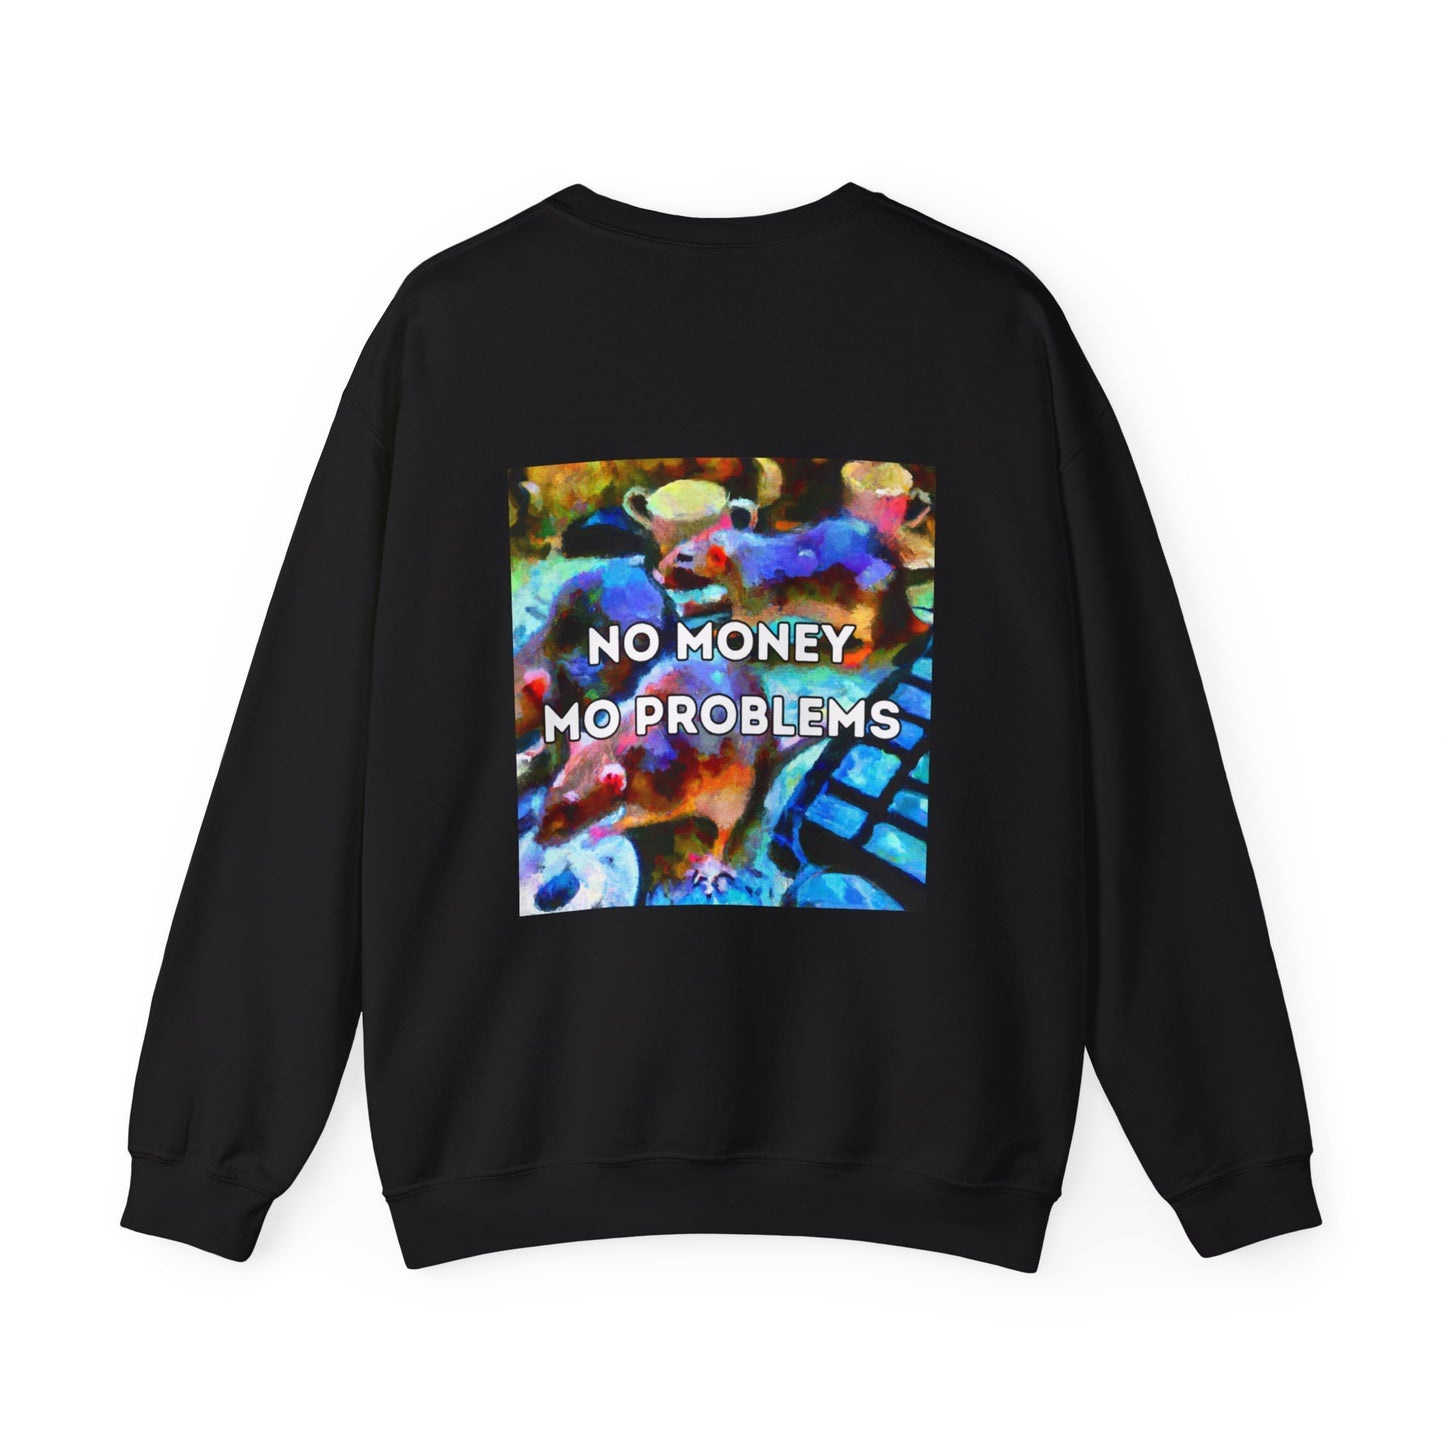 No Money Mo Problems - sweatshirt x Sarah Words Collection